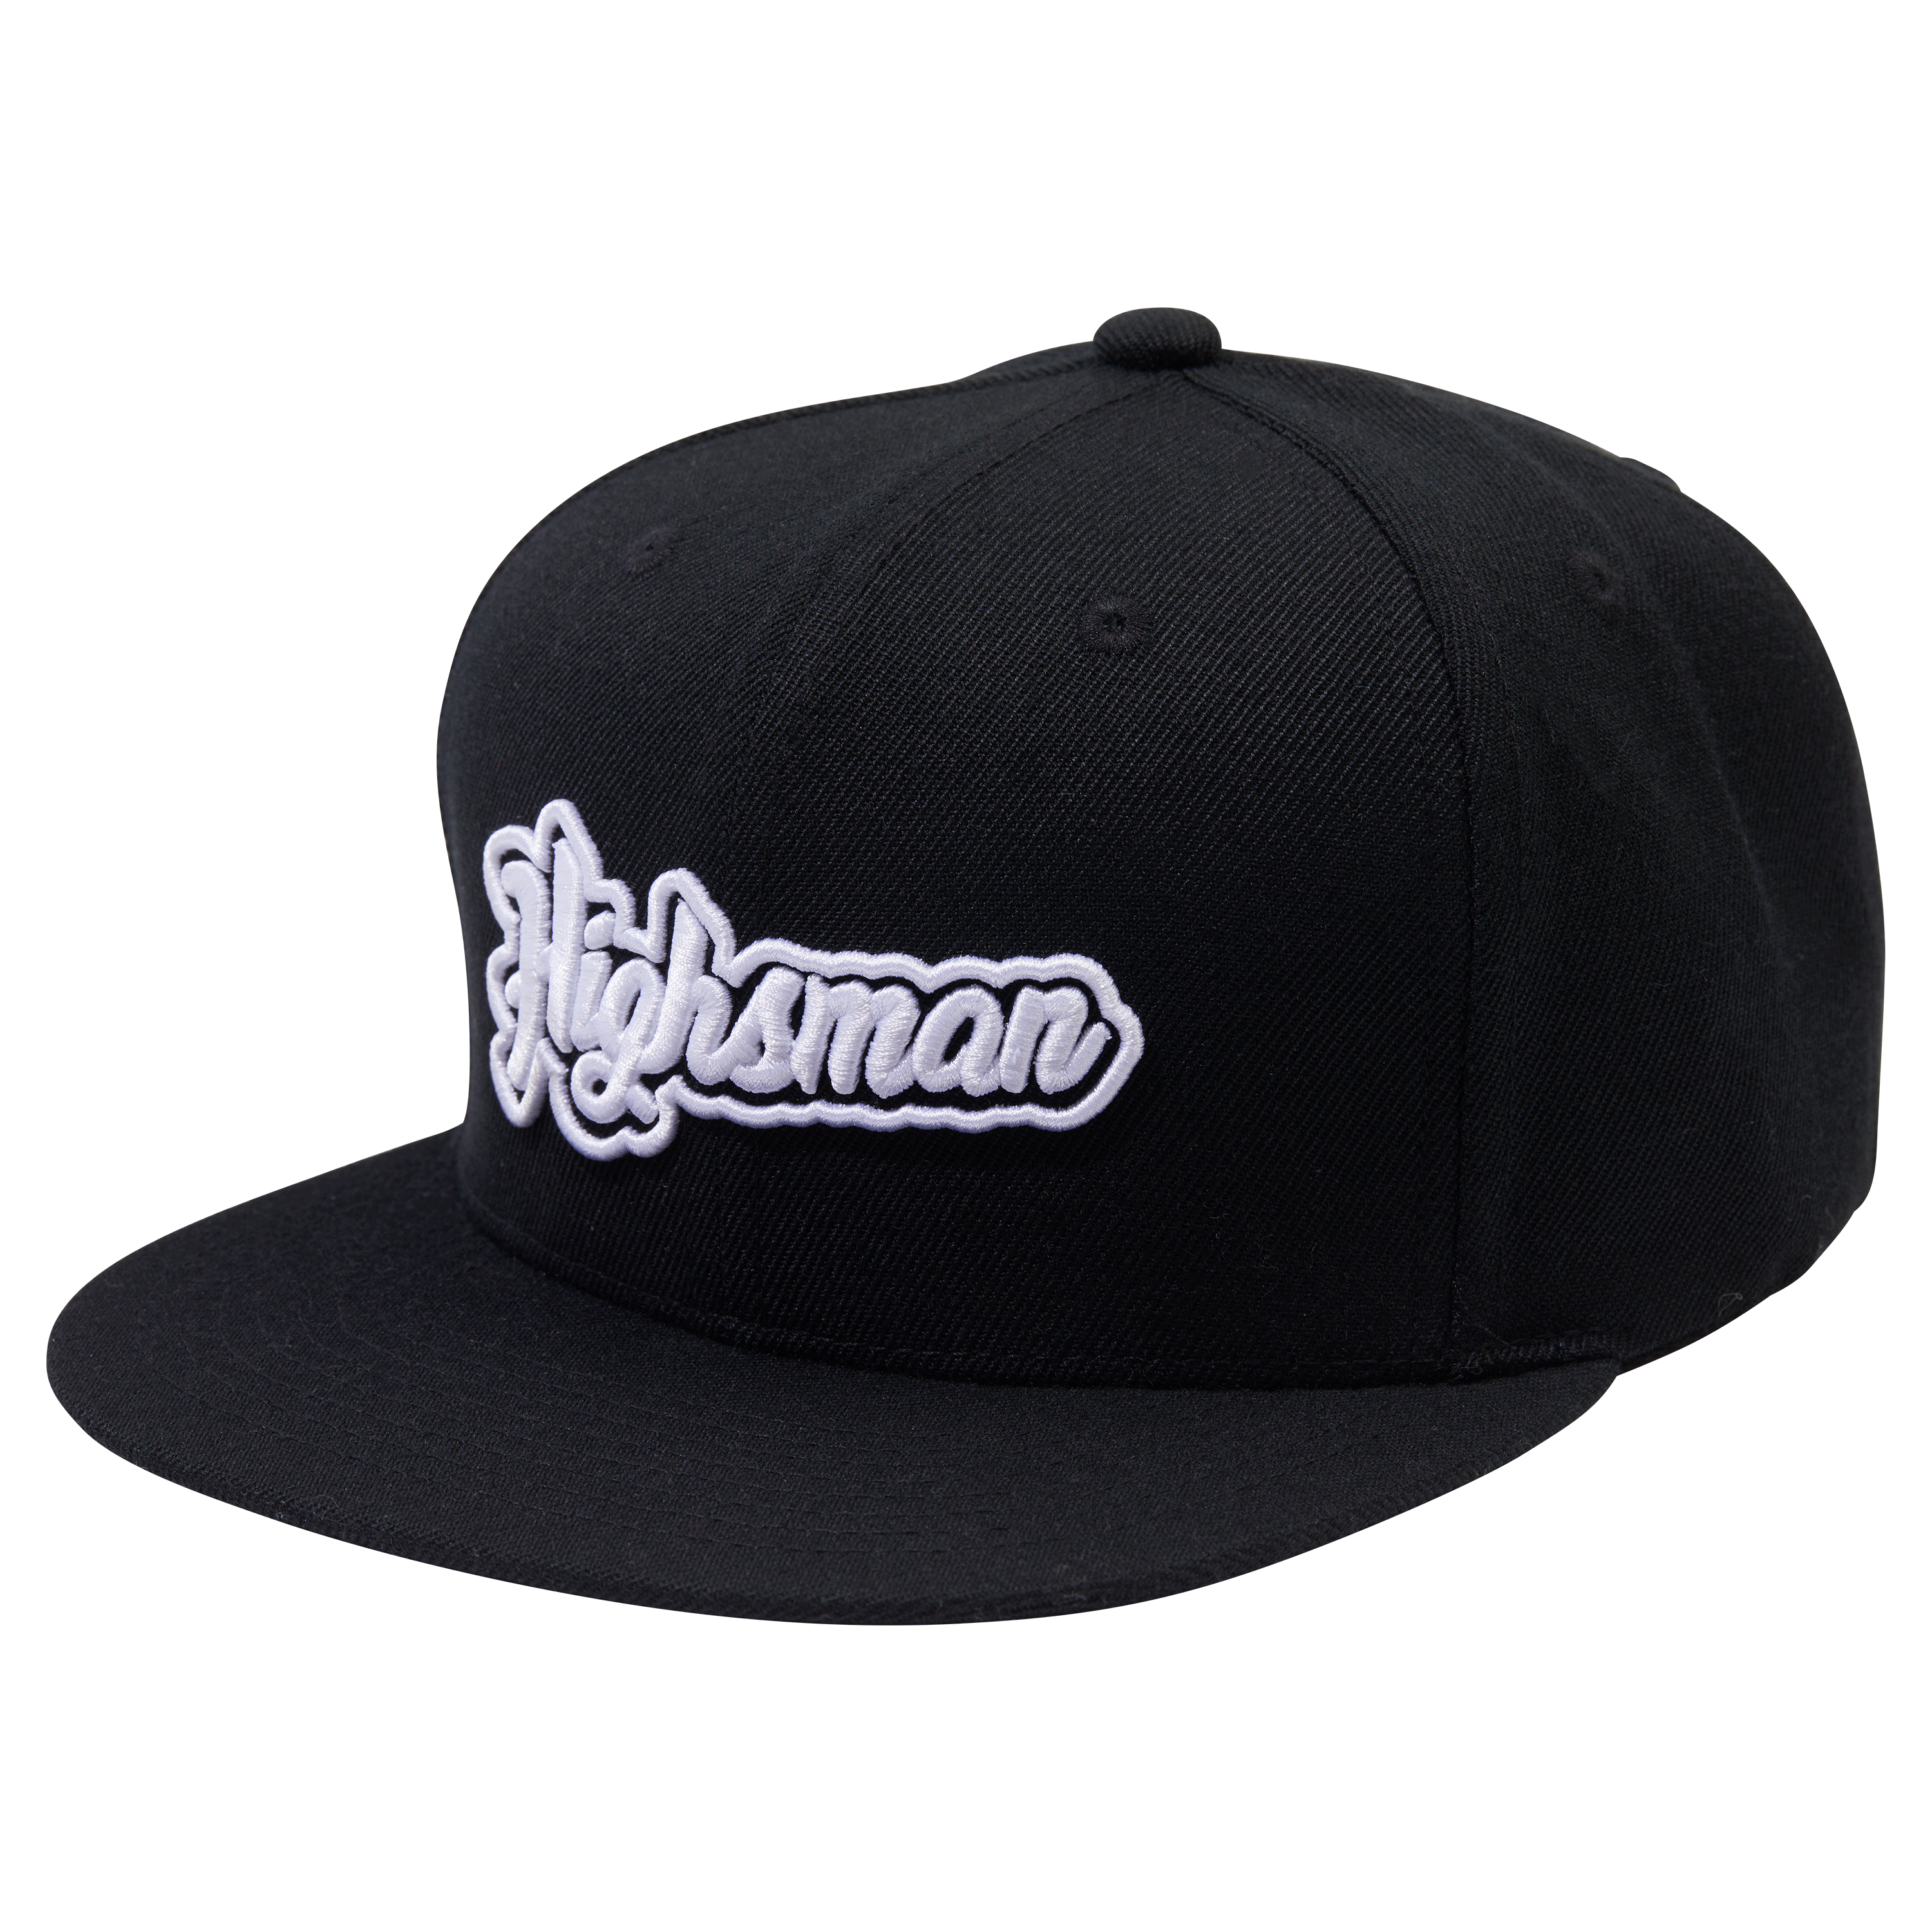 Highsman Snapback Hat